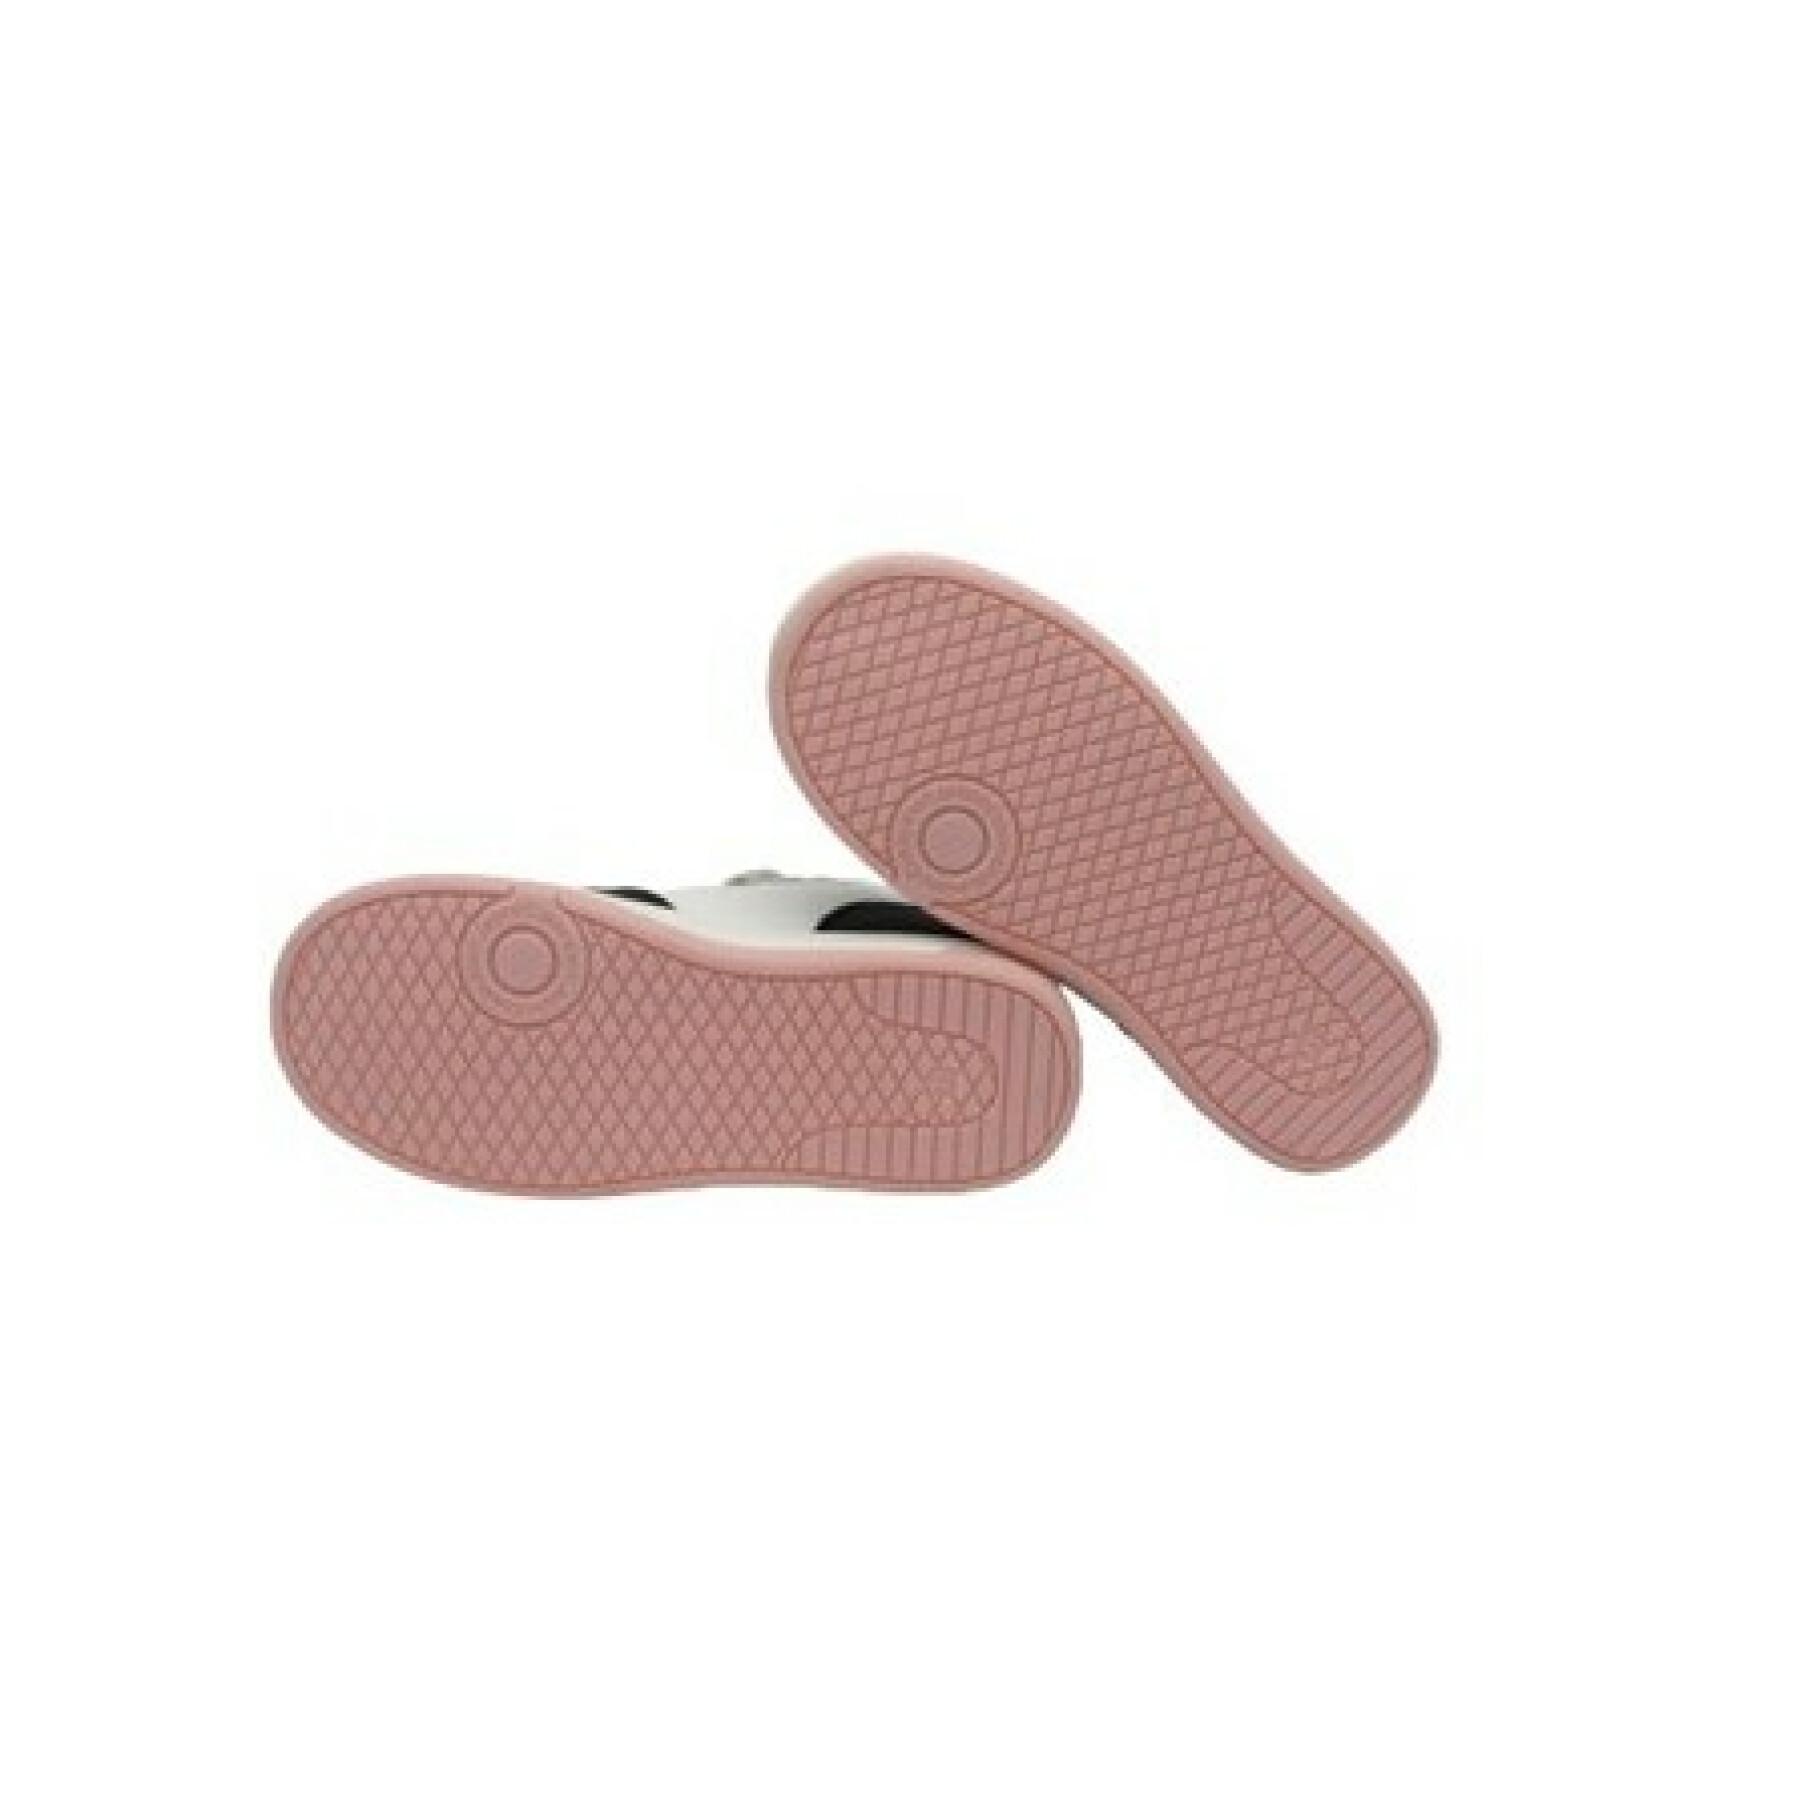 Zapatillas de deporte con cordones/velcro para niños Calvin Klein black/white/pink